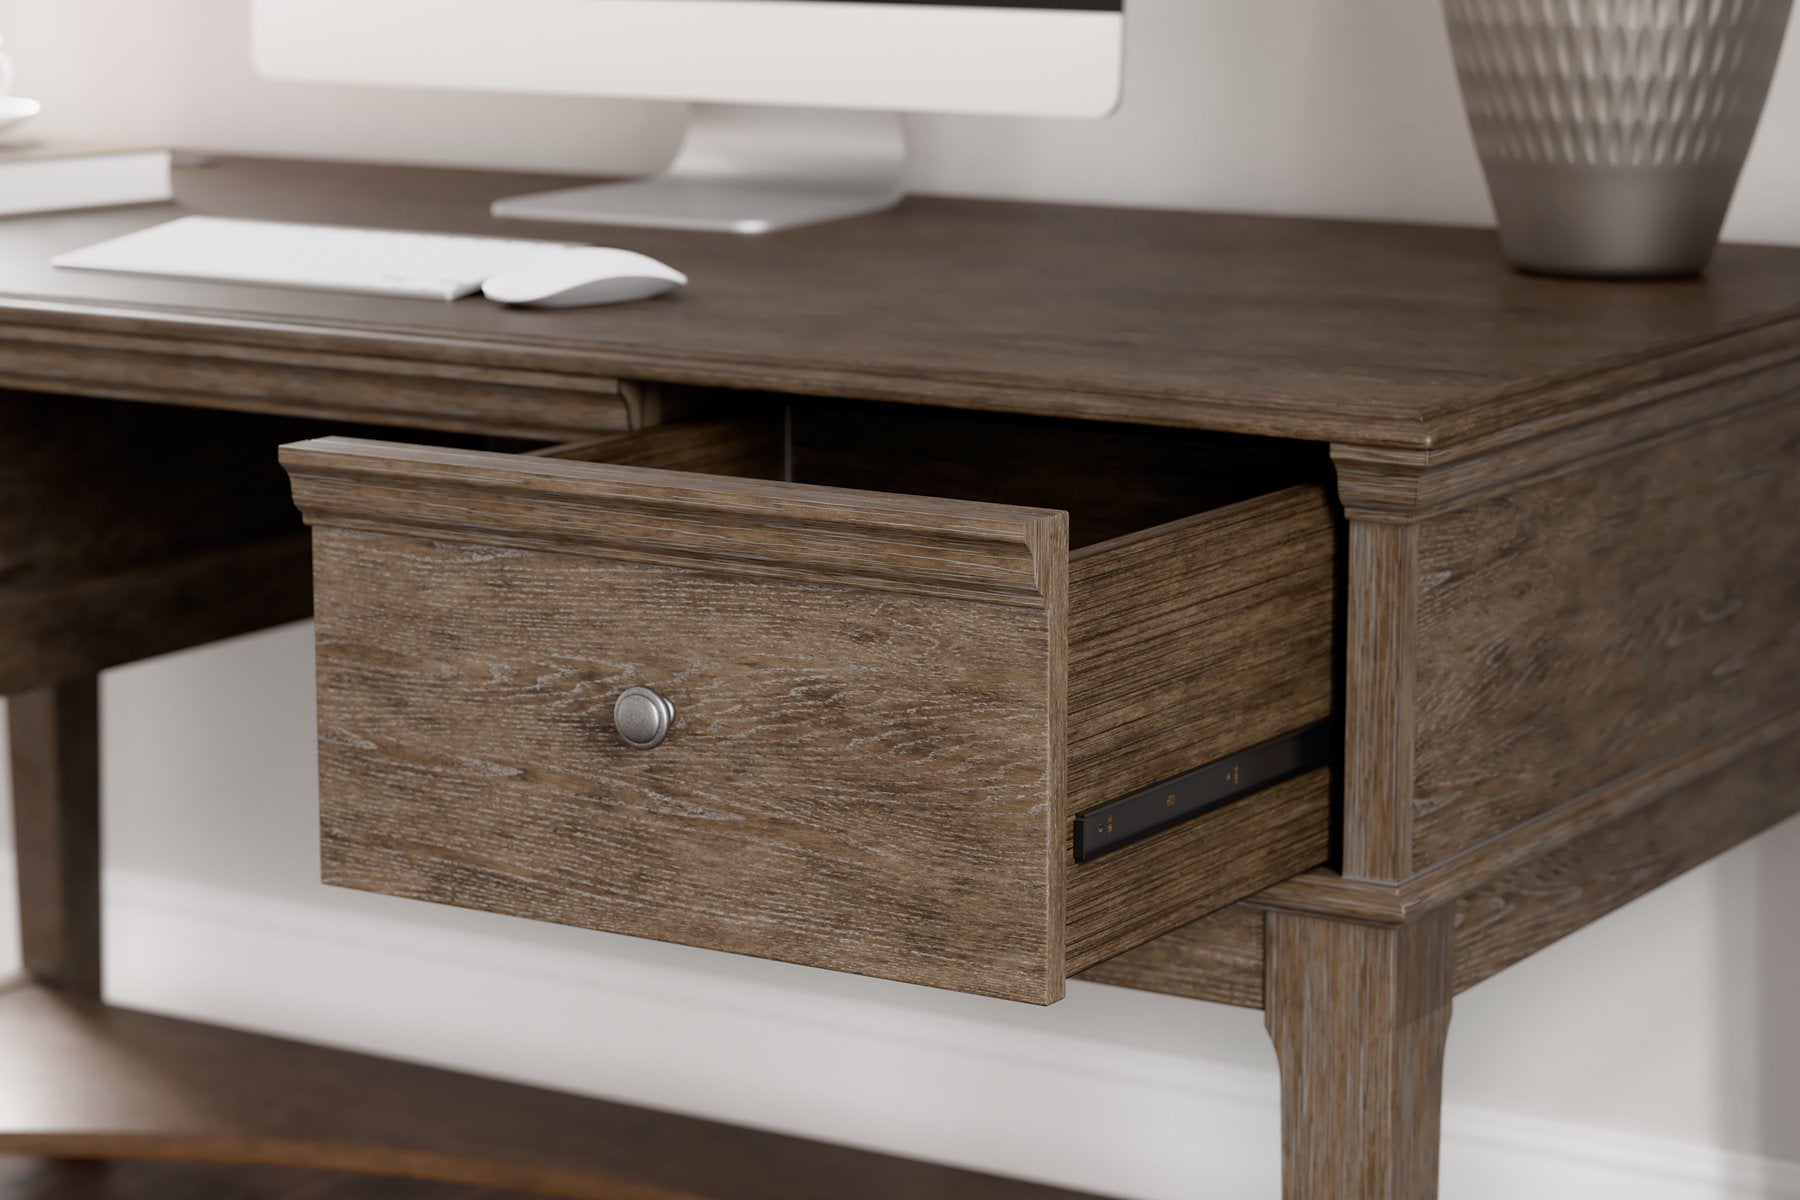 Janismore Home Office Storage Leg Desk - Half Price Furniture